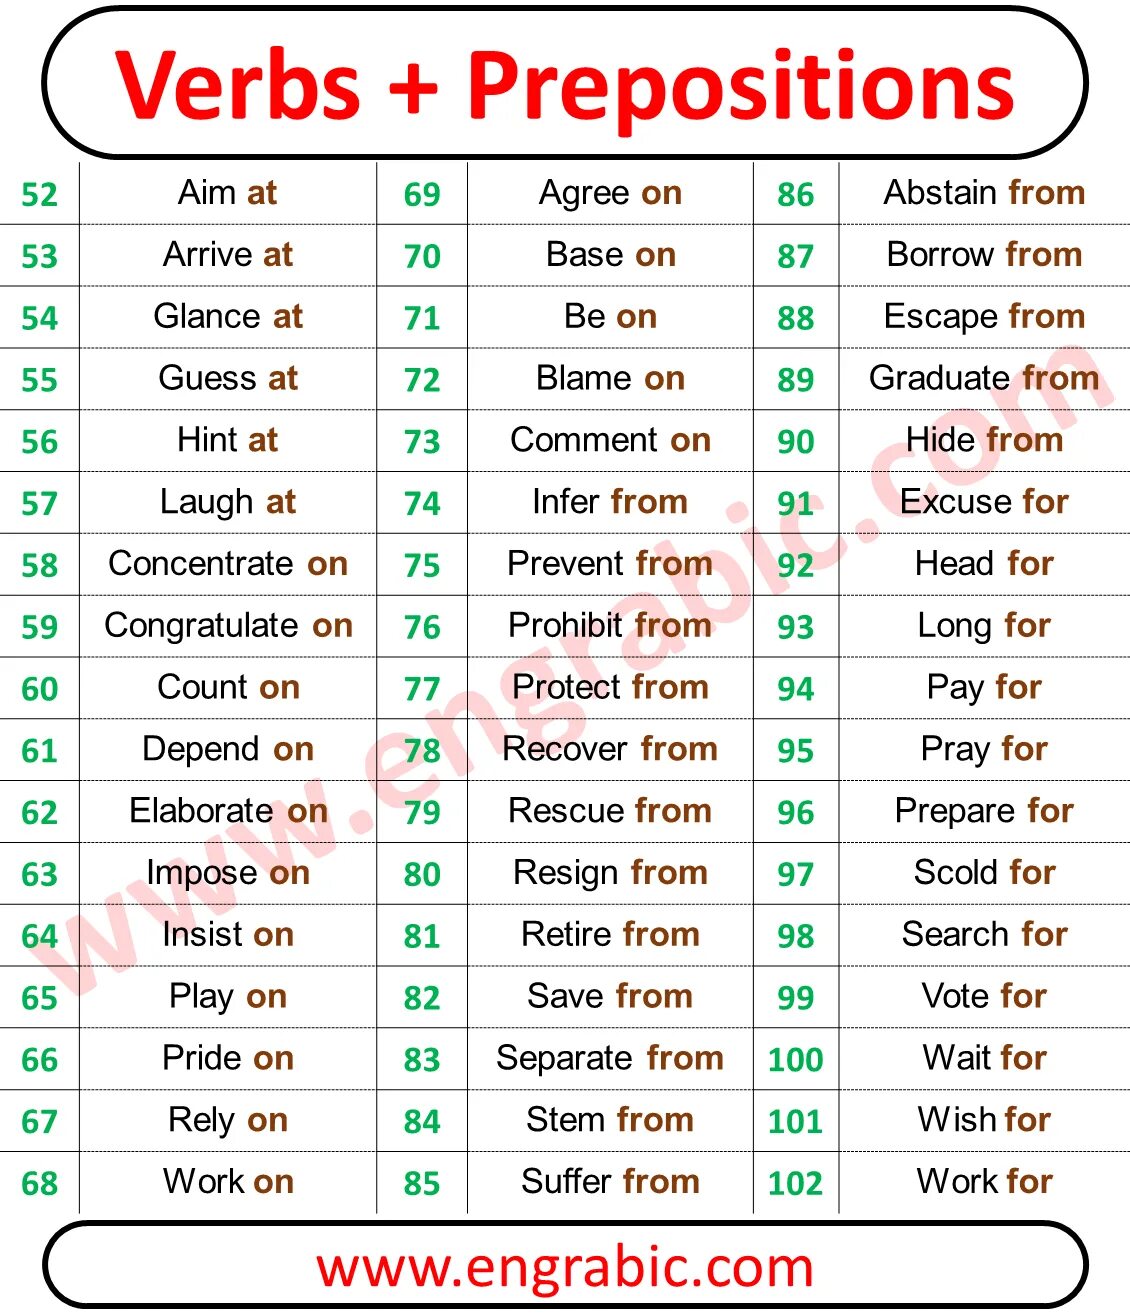 Words with prepositions list. Verbs with prepositions список. Verb preposition список. Prepositional verbs в английском языке. Prepositions с глаголами.